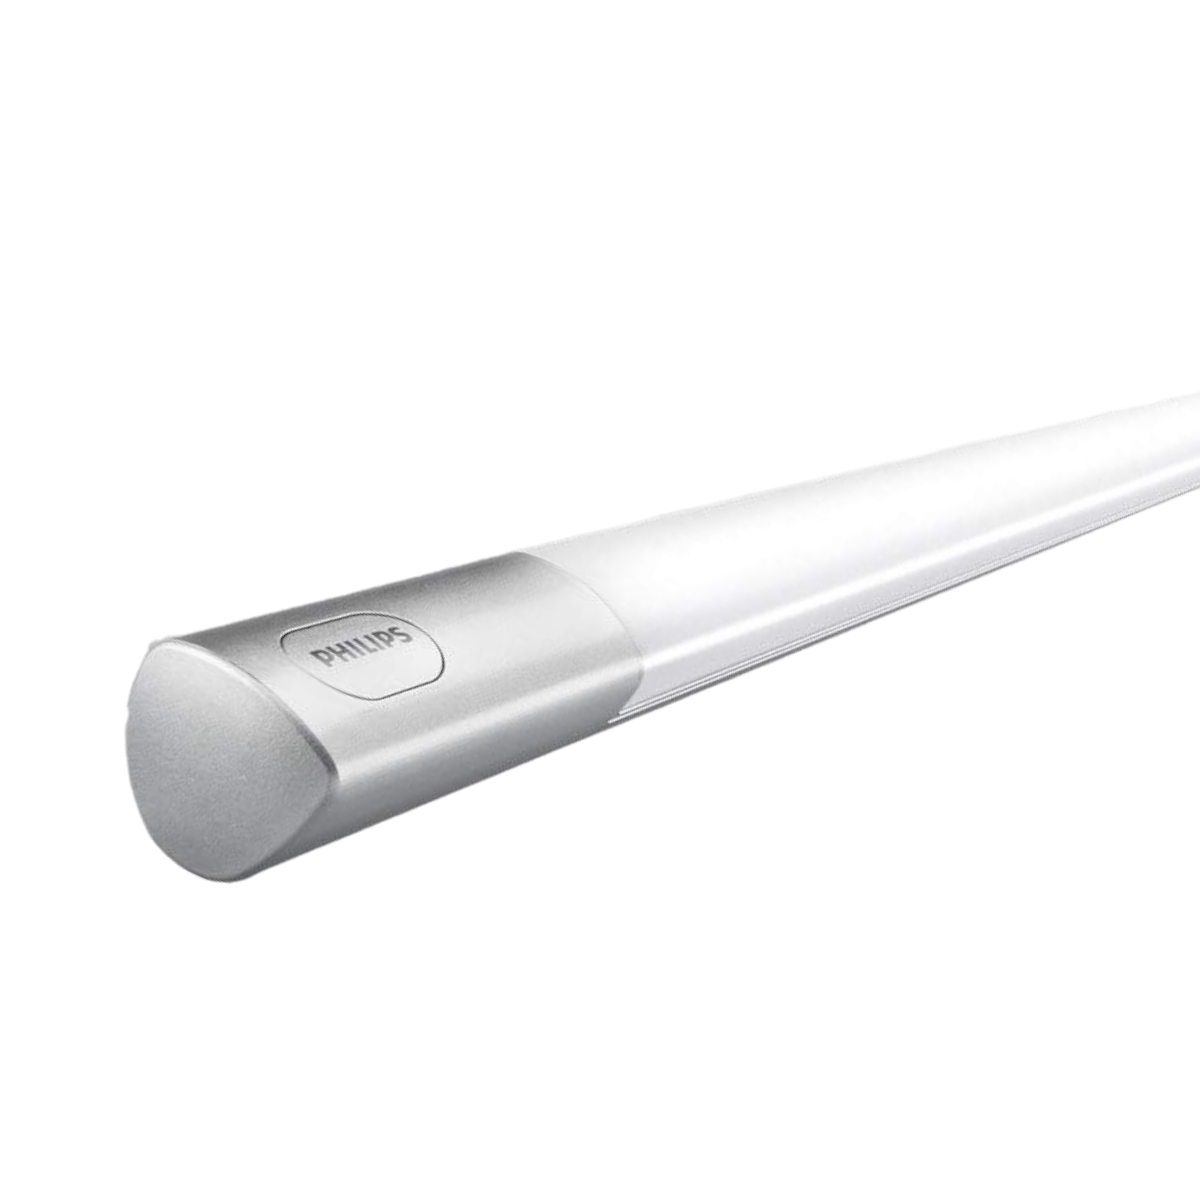 Philips Mirolta Pro LED Tube light